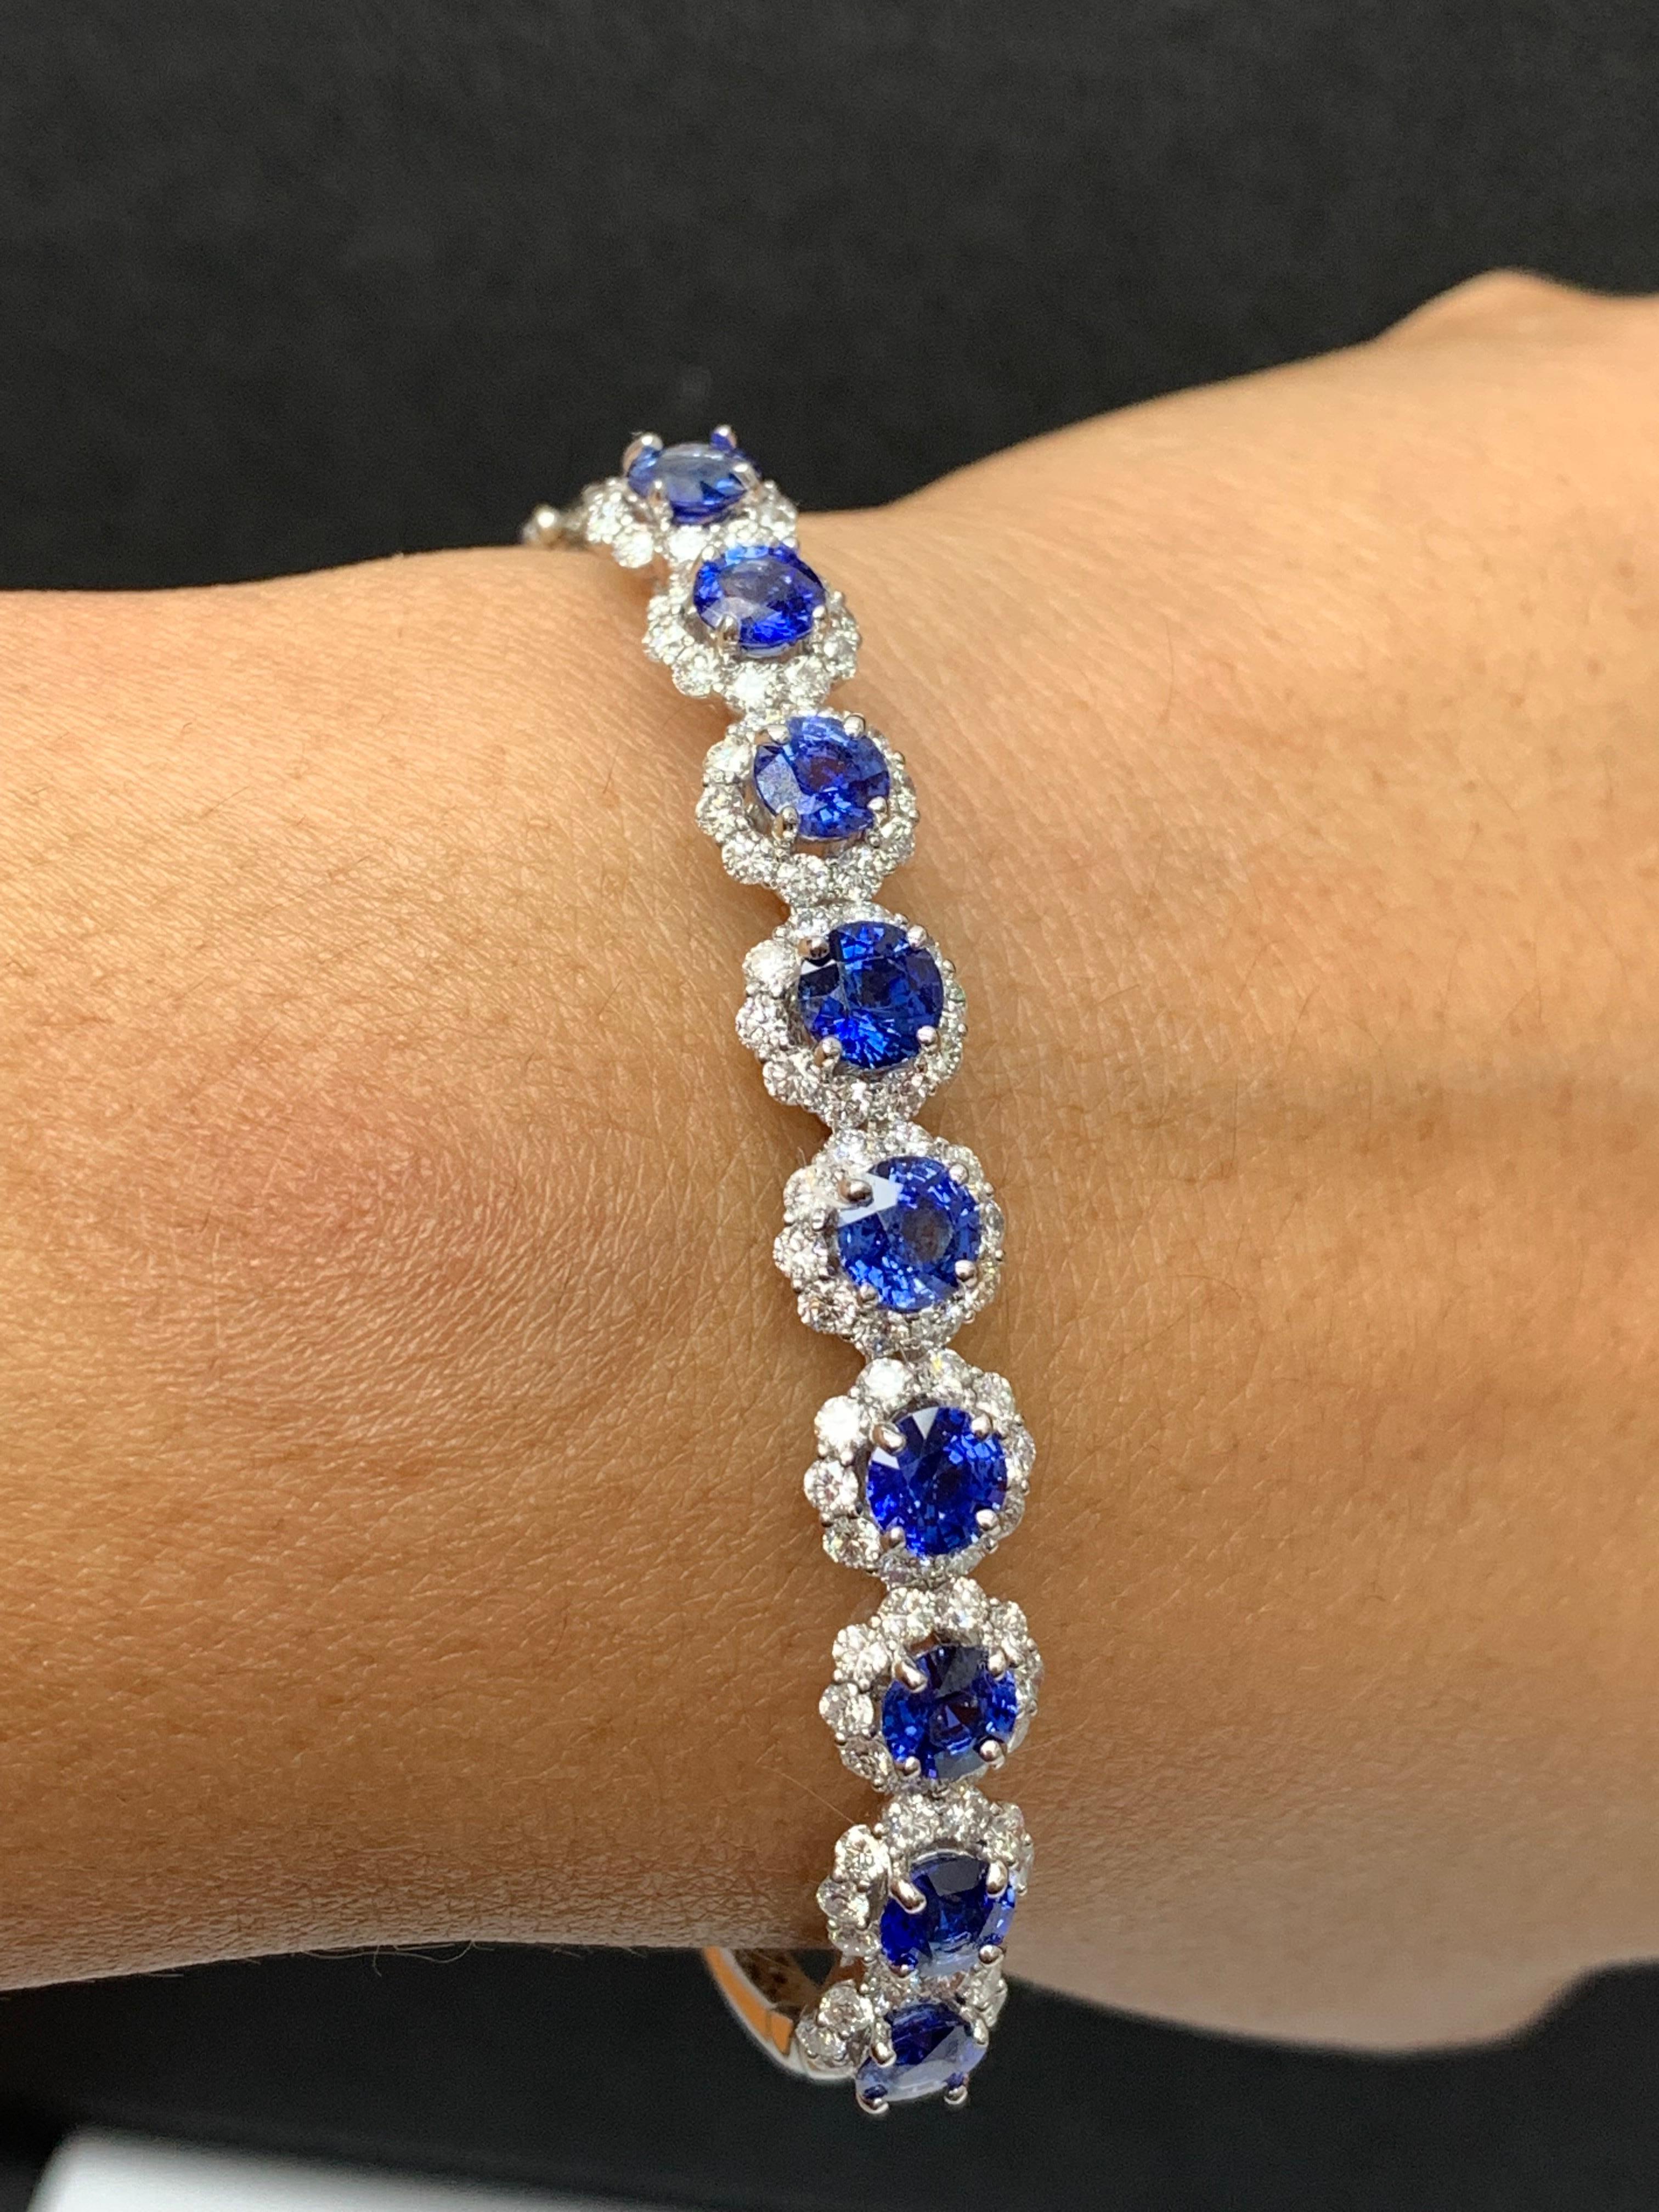 Contemporary 4.88 Carat Brilliant Cut Blue Sapphire Diamond Bangle Bracelet in 18k White Gold For Sale